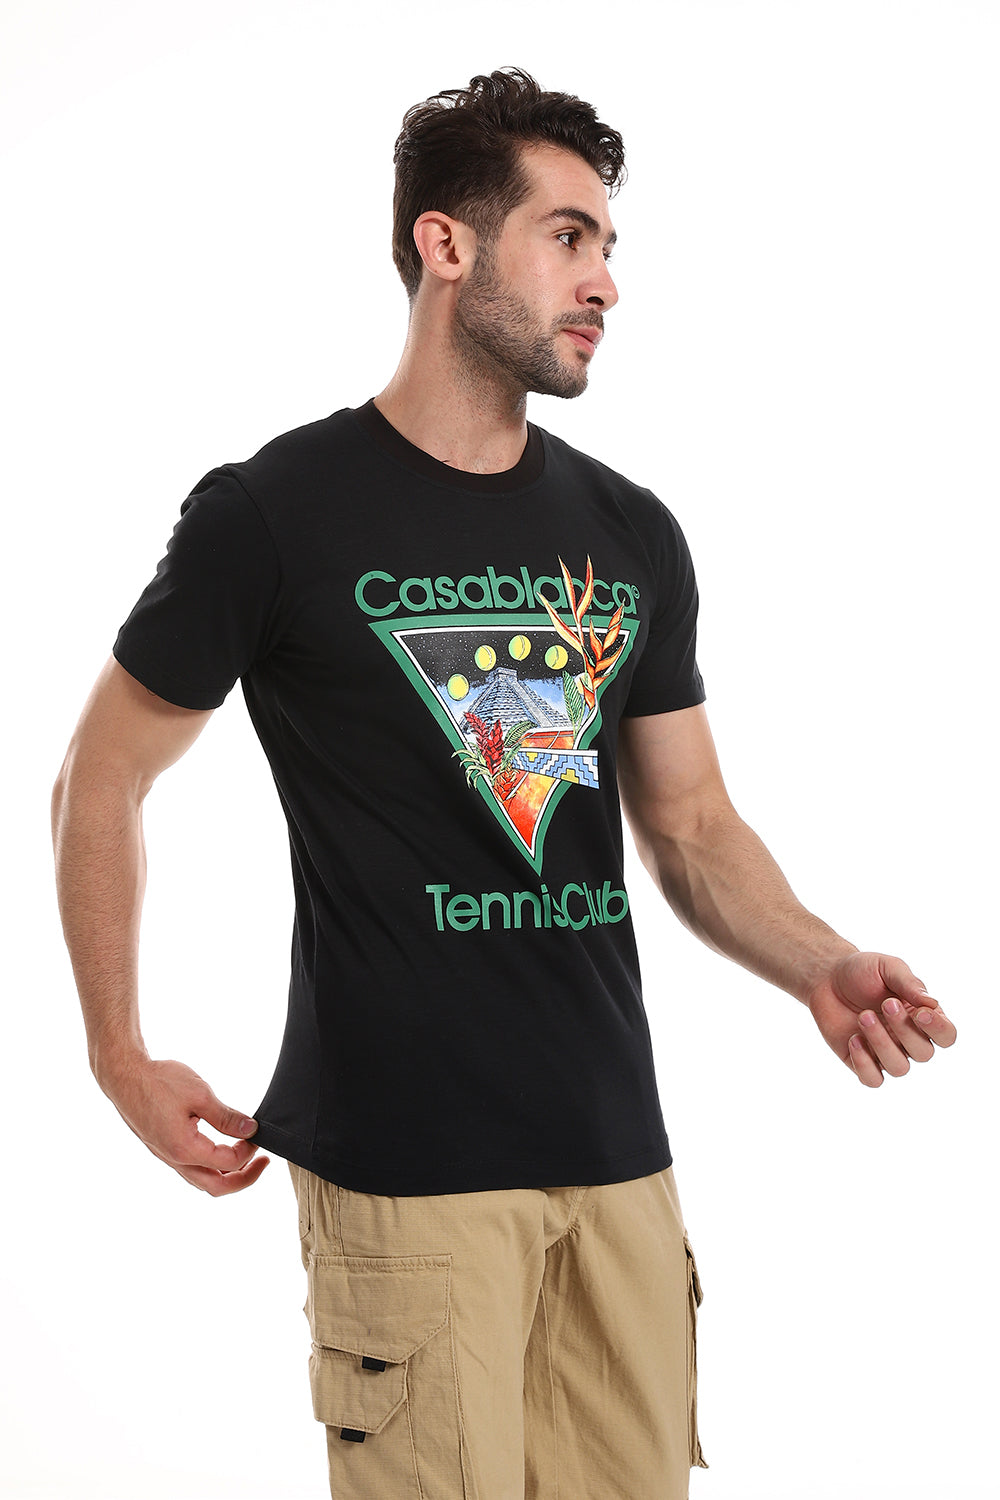 تي شيرت أسود بصدر مثلث "Casablanca Tennis Club".